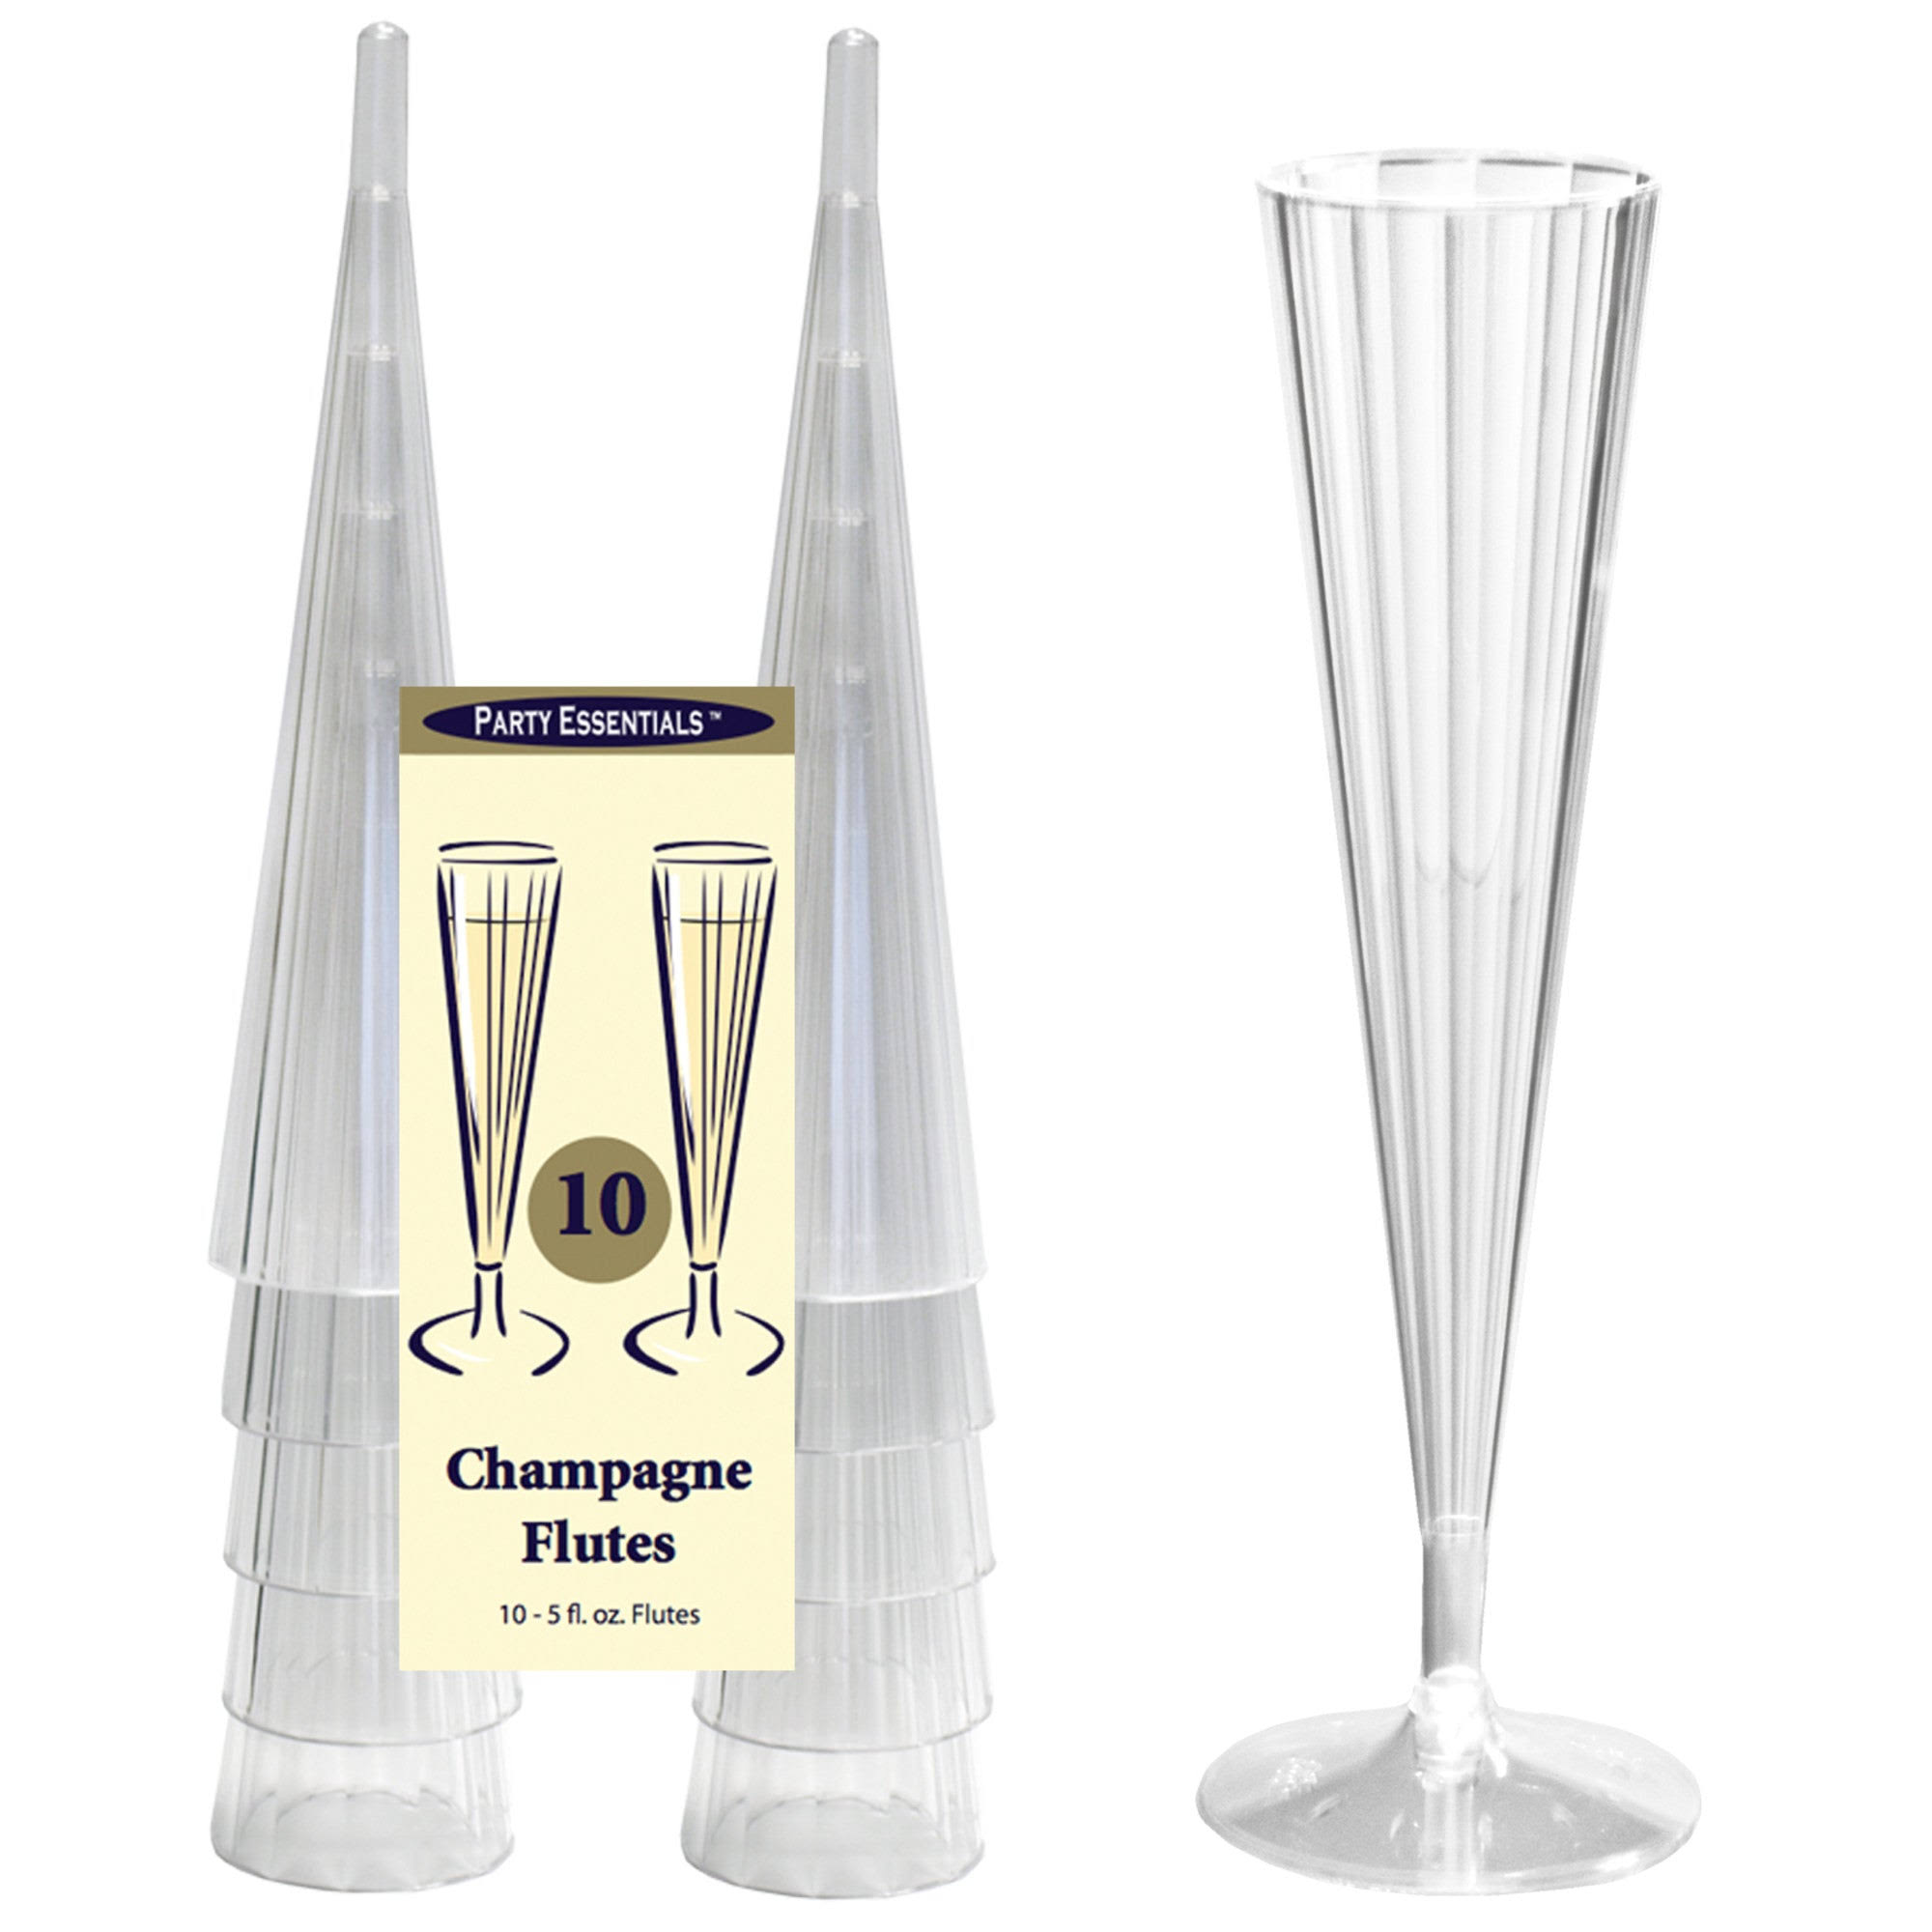 Northwest Enterprises Deluxe Hard Plastic Champagne Flute - Clear, 150ml